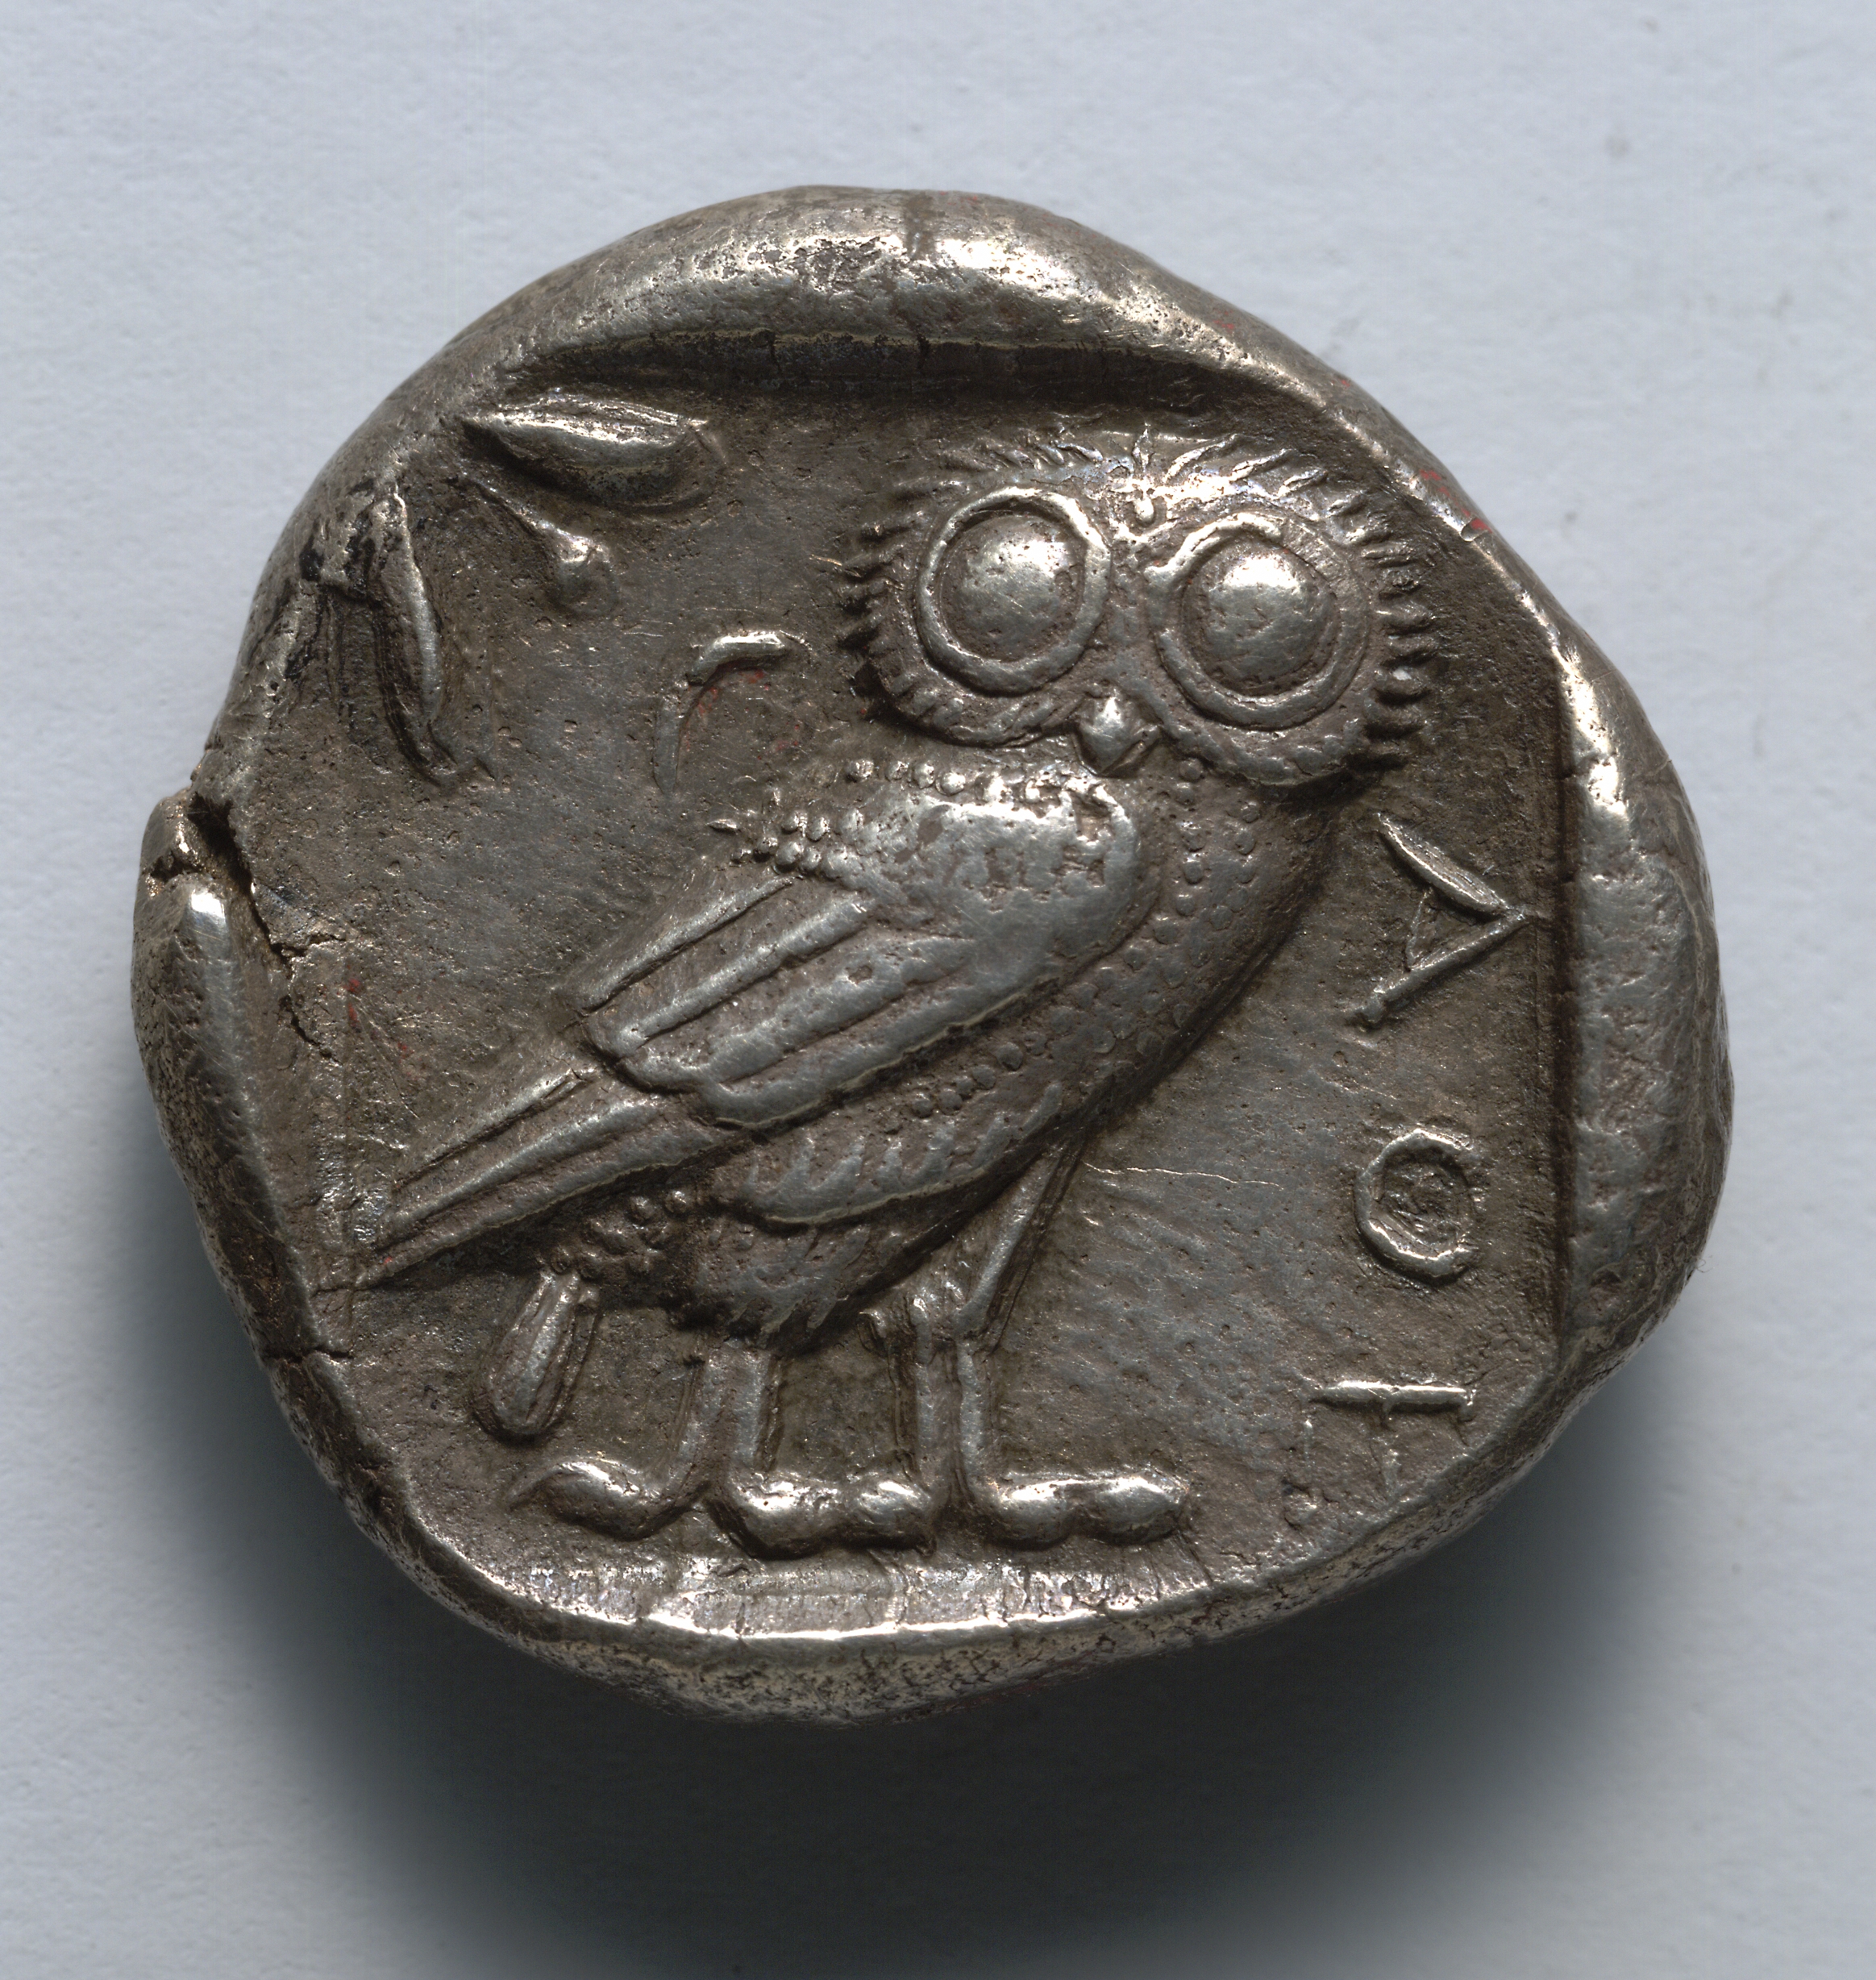 Tetradrachm: Owl (reverse)